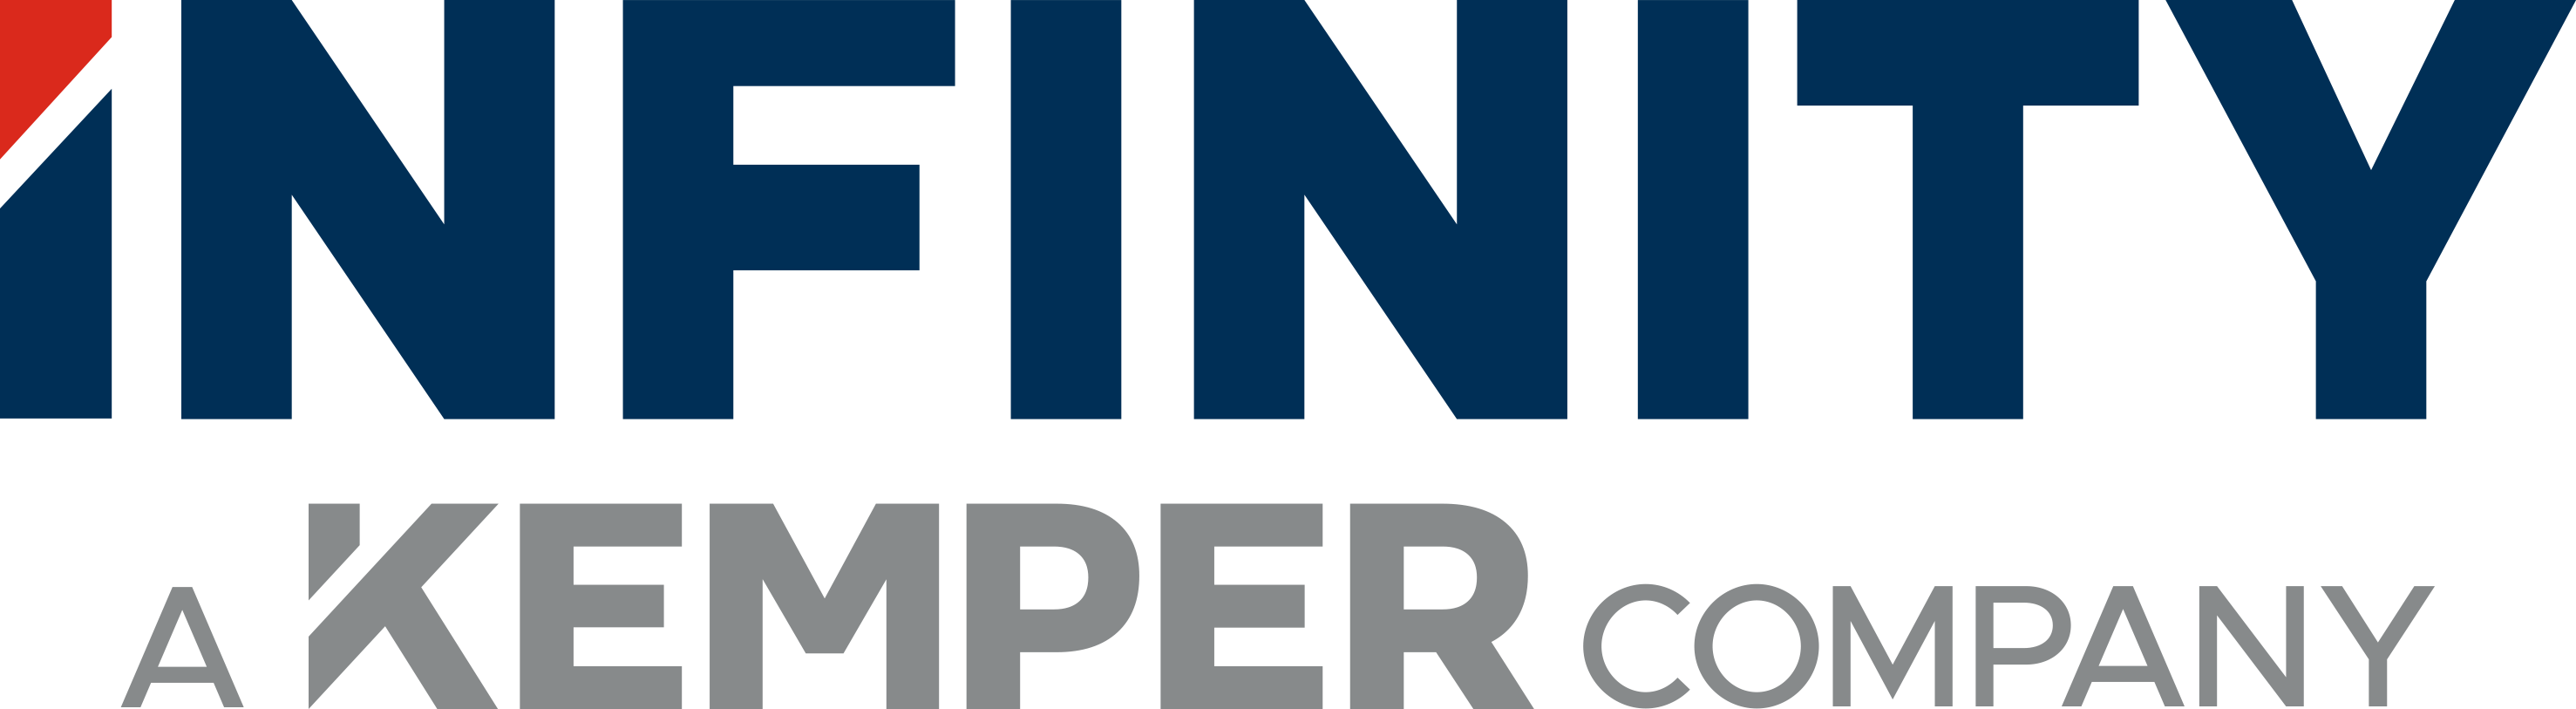 Kemper Infinity Insurance Phone Number - Kemper Buys Birmingham Based Infinity Insurance / Kmpr ...